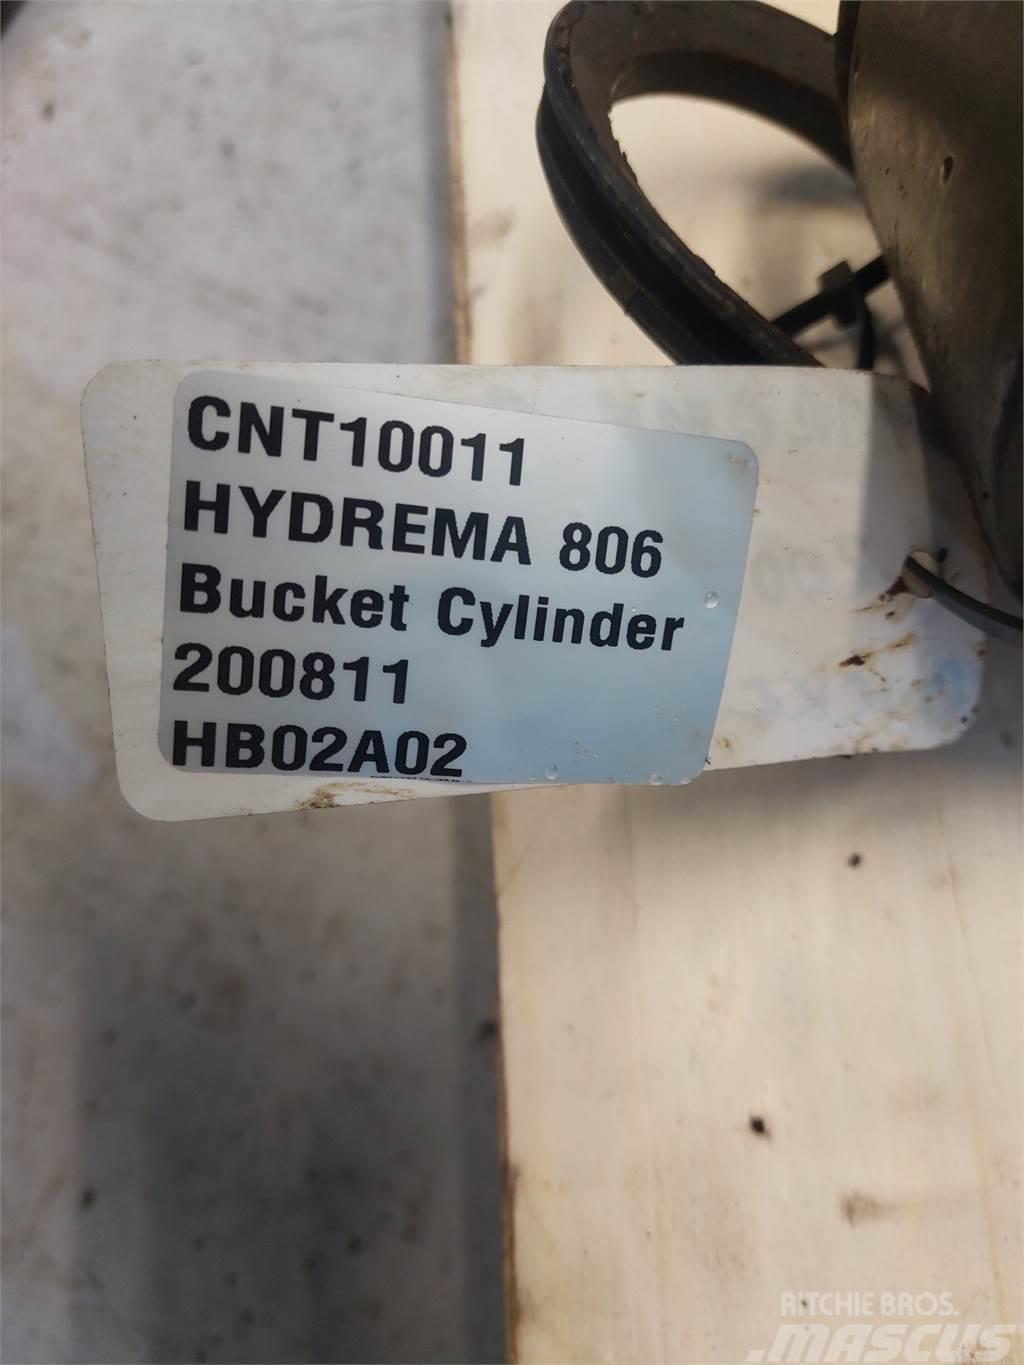 Hydrema 806 Excavator